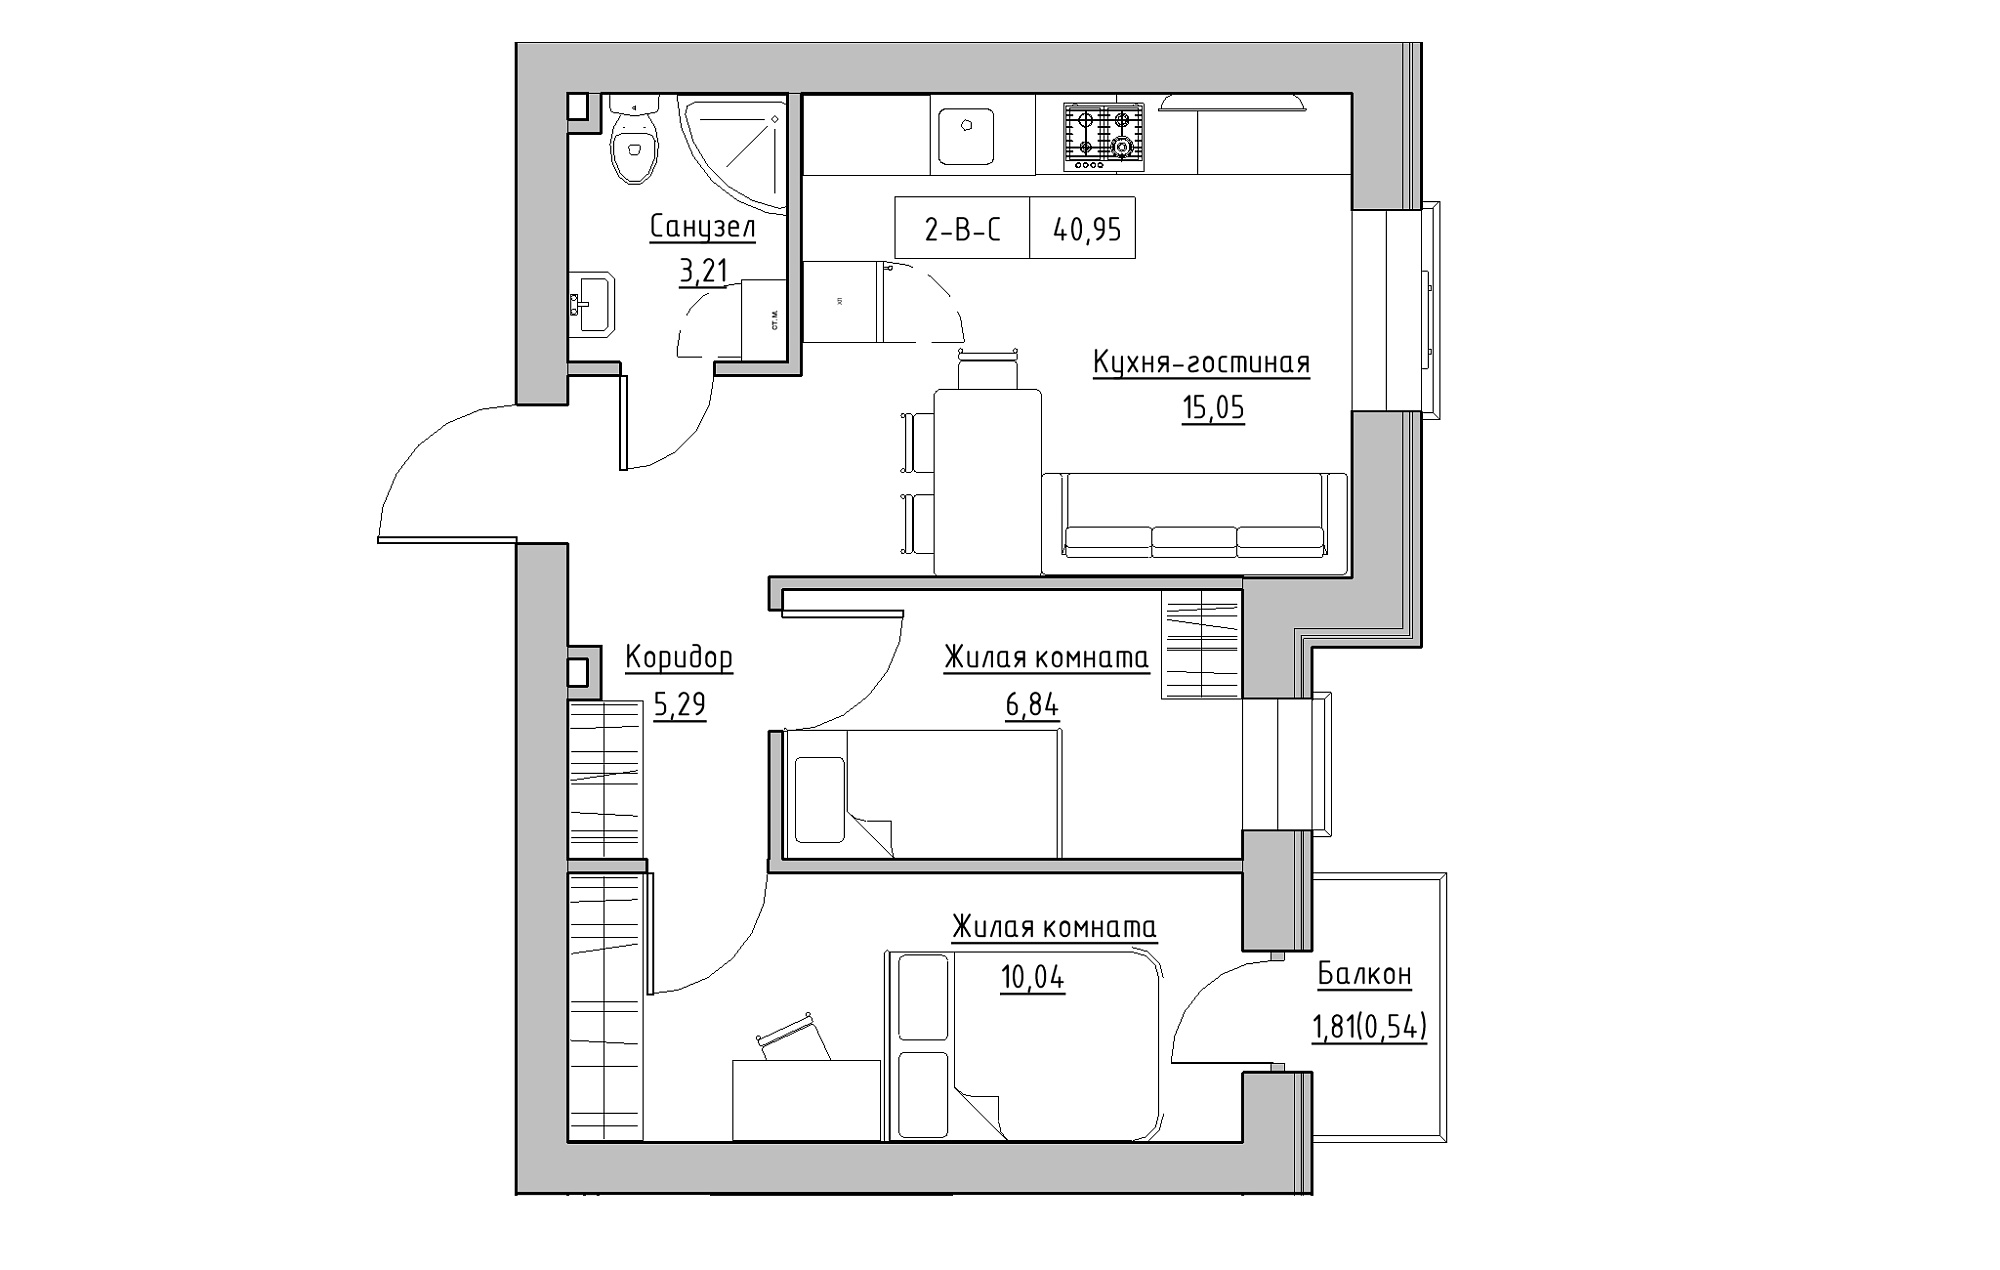 Planning 2-rm flats area 40.95m2, KS-018-04/0010.